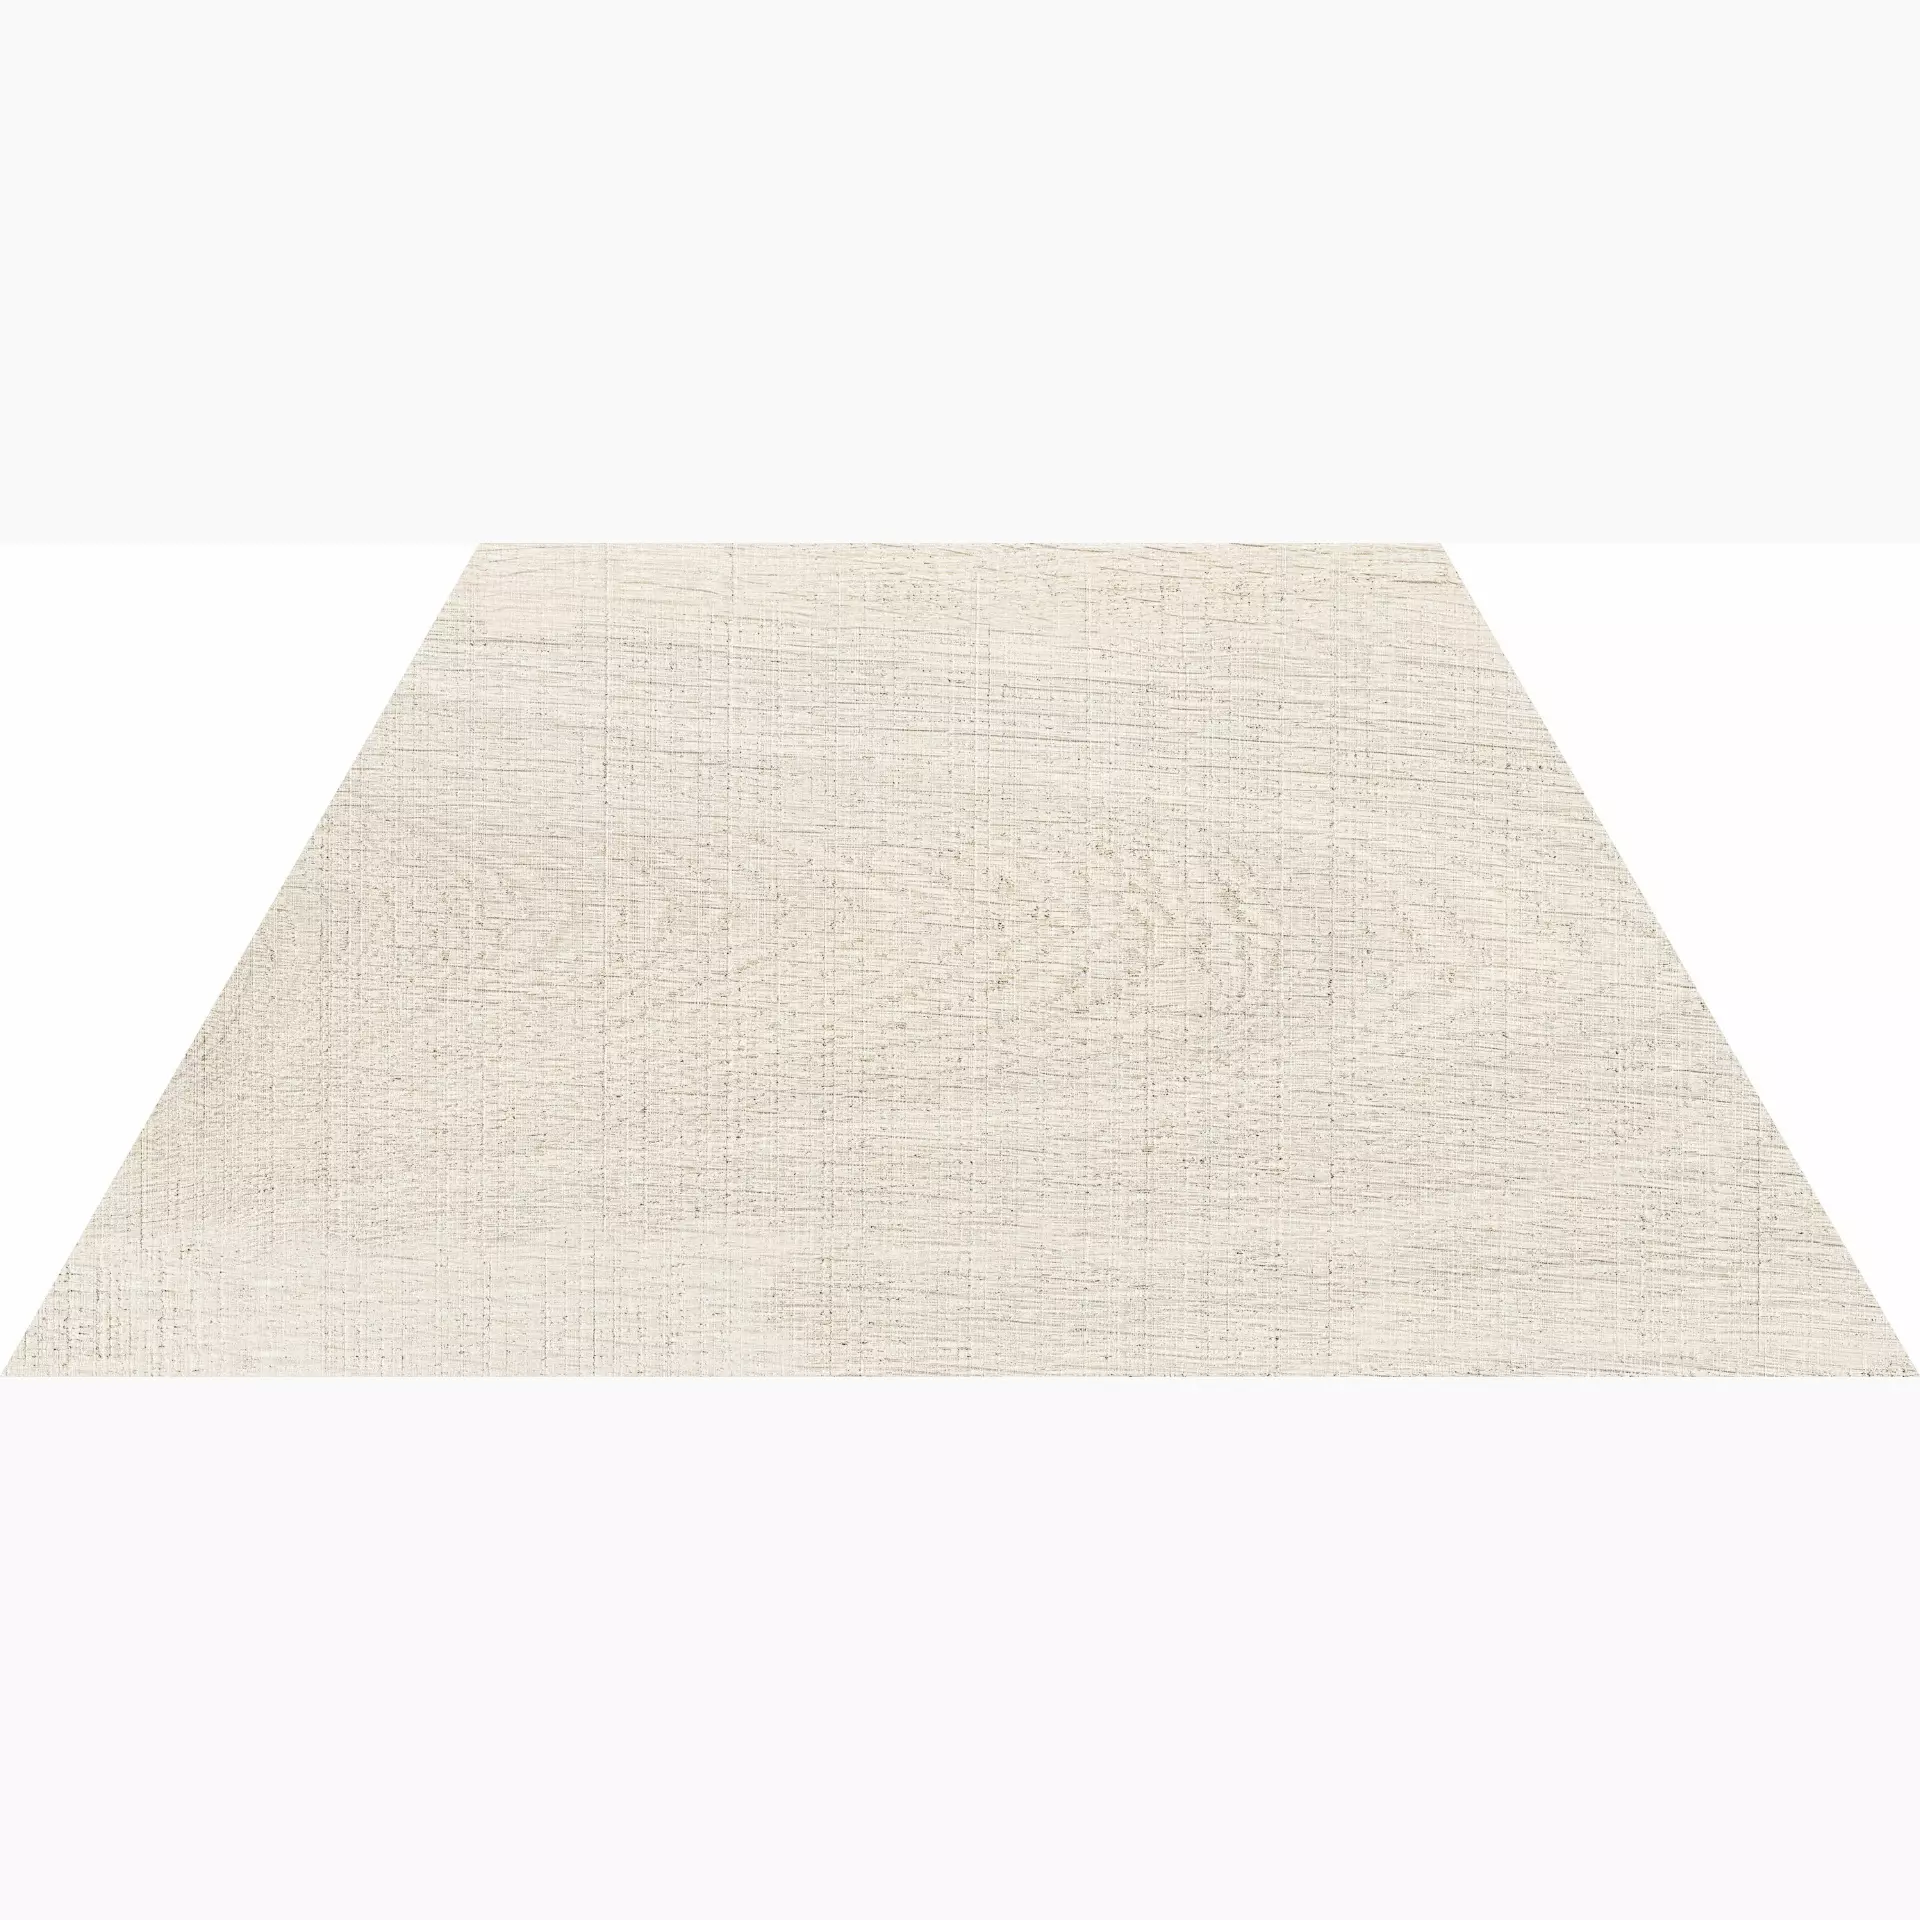 ABK Crossroad Wood White Naturale Trapezio PF60001097 30x60cm rectified 7mm